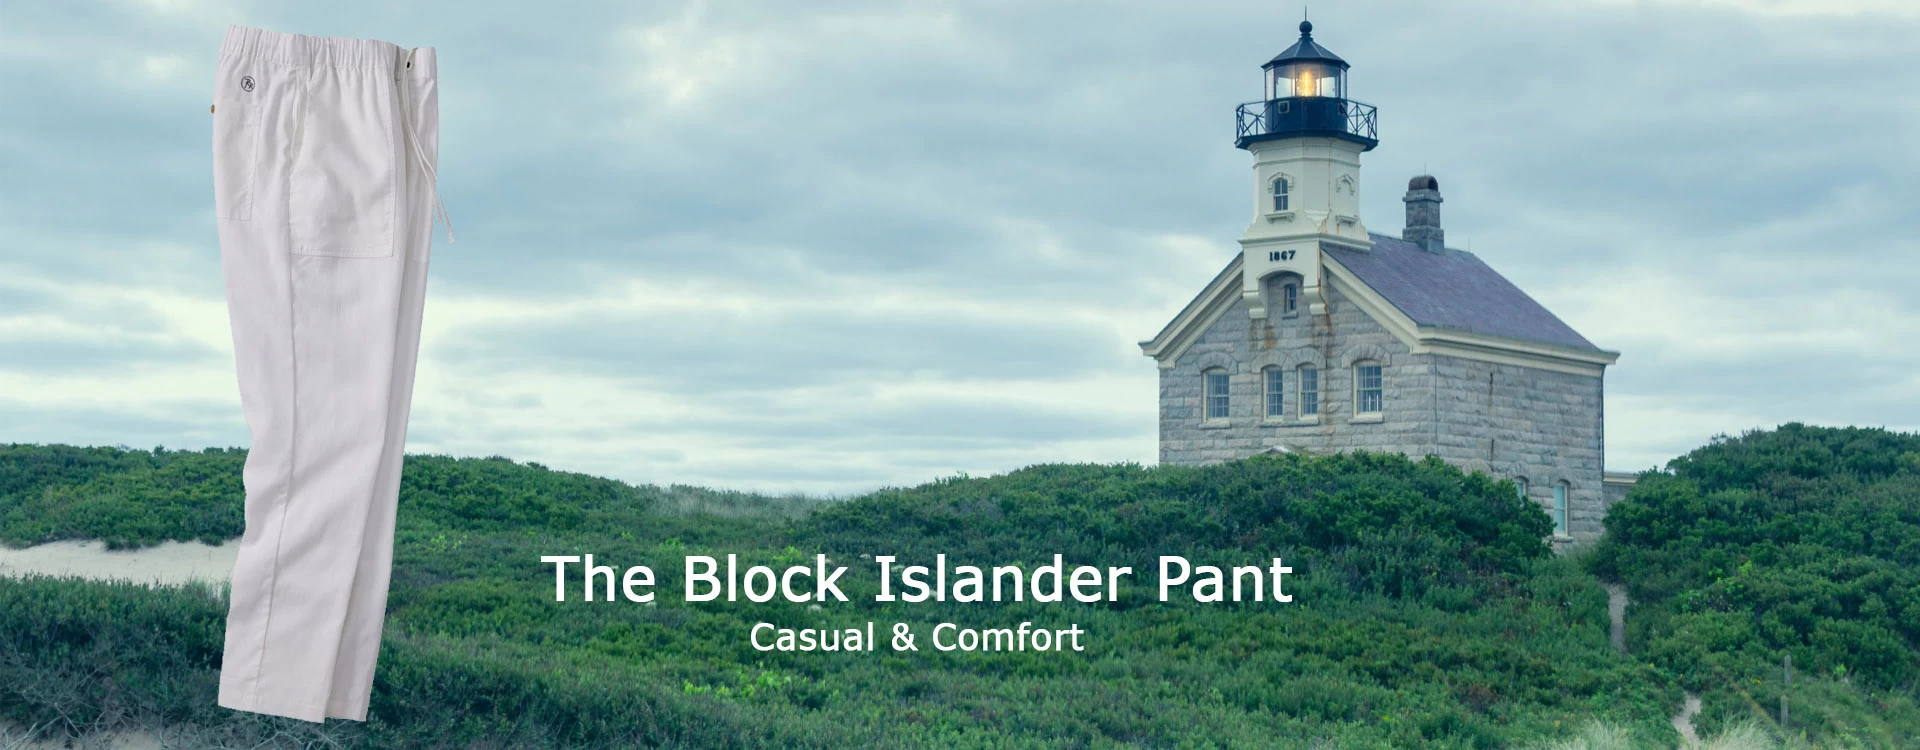 block islander pant